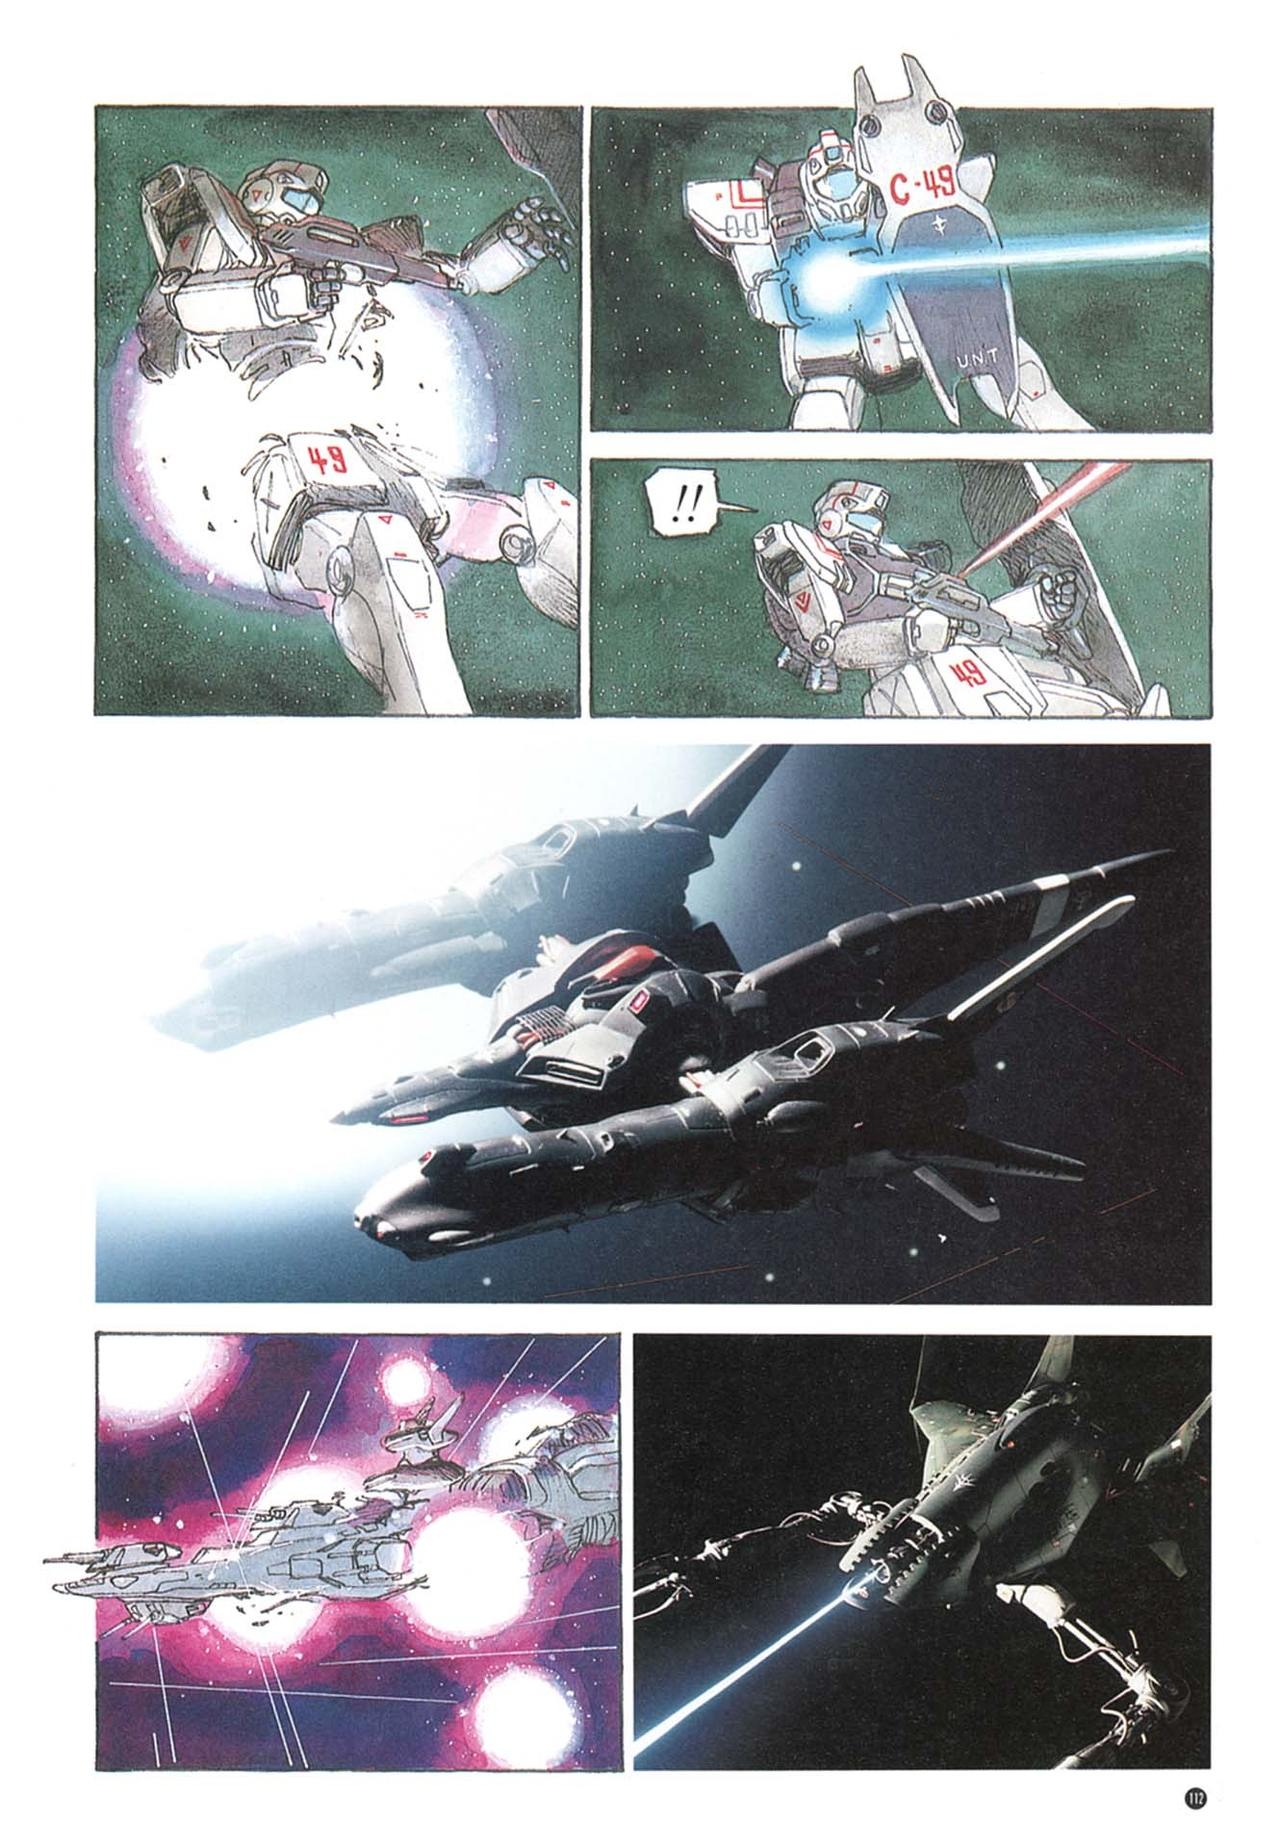 [Kazuhisa Kondo] Kazuhisa Kondo 2D & 3D Works - Go Ahead - From Mobile Suit Gundam to Original Mechanism 111